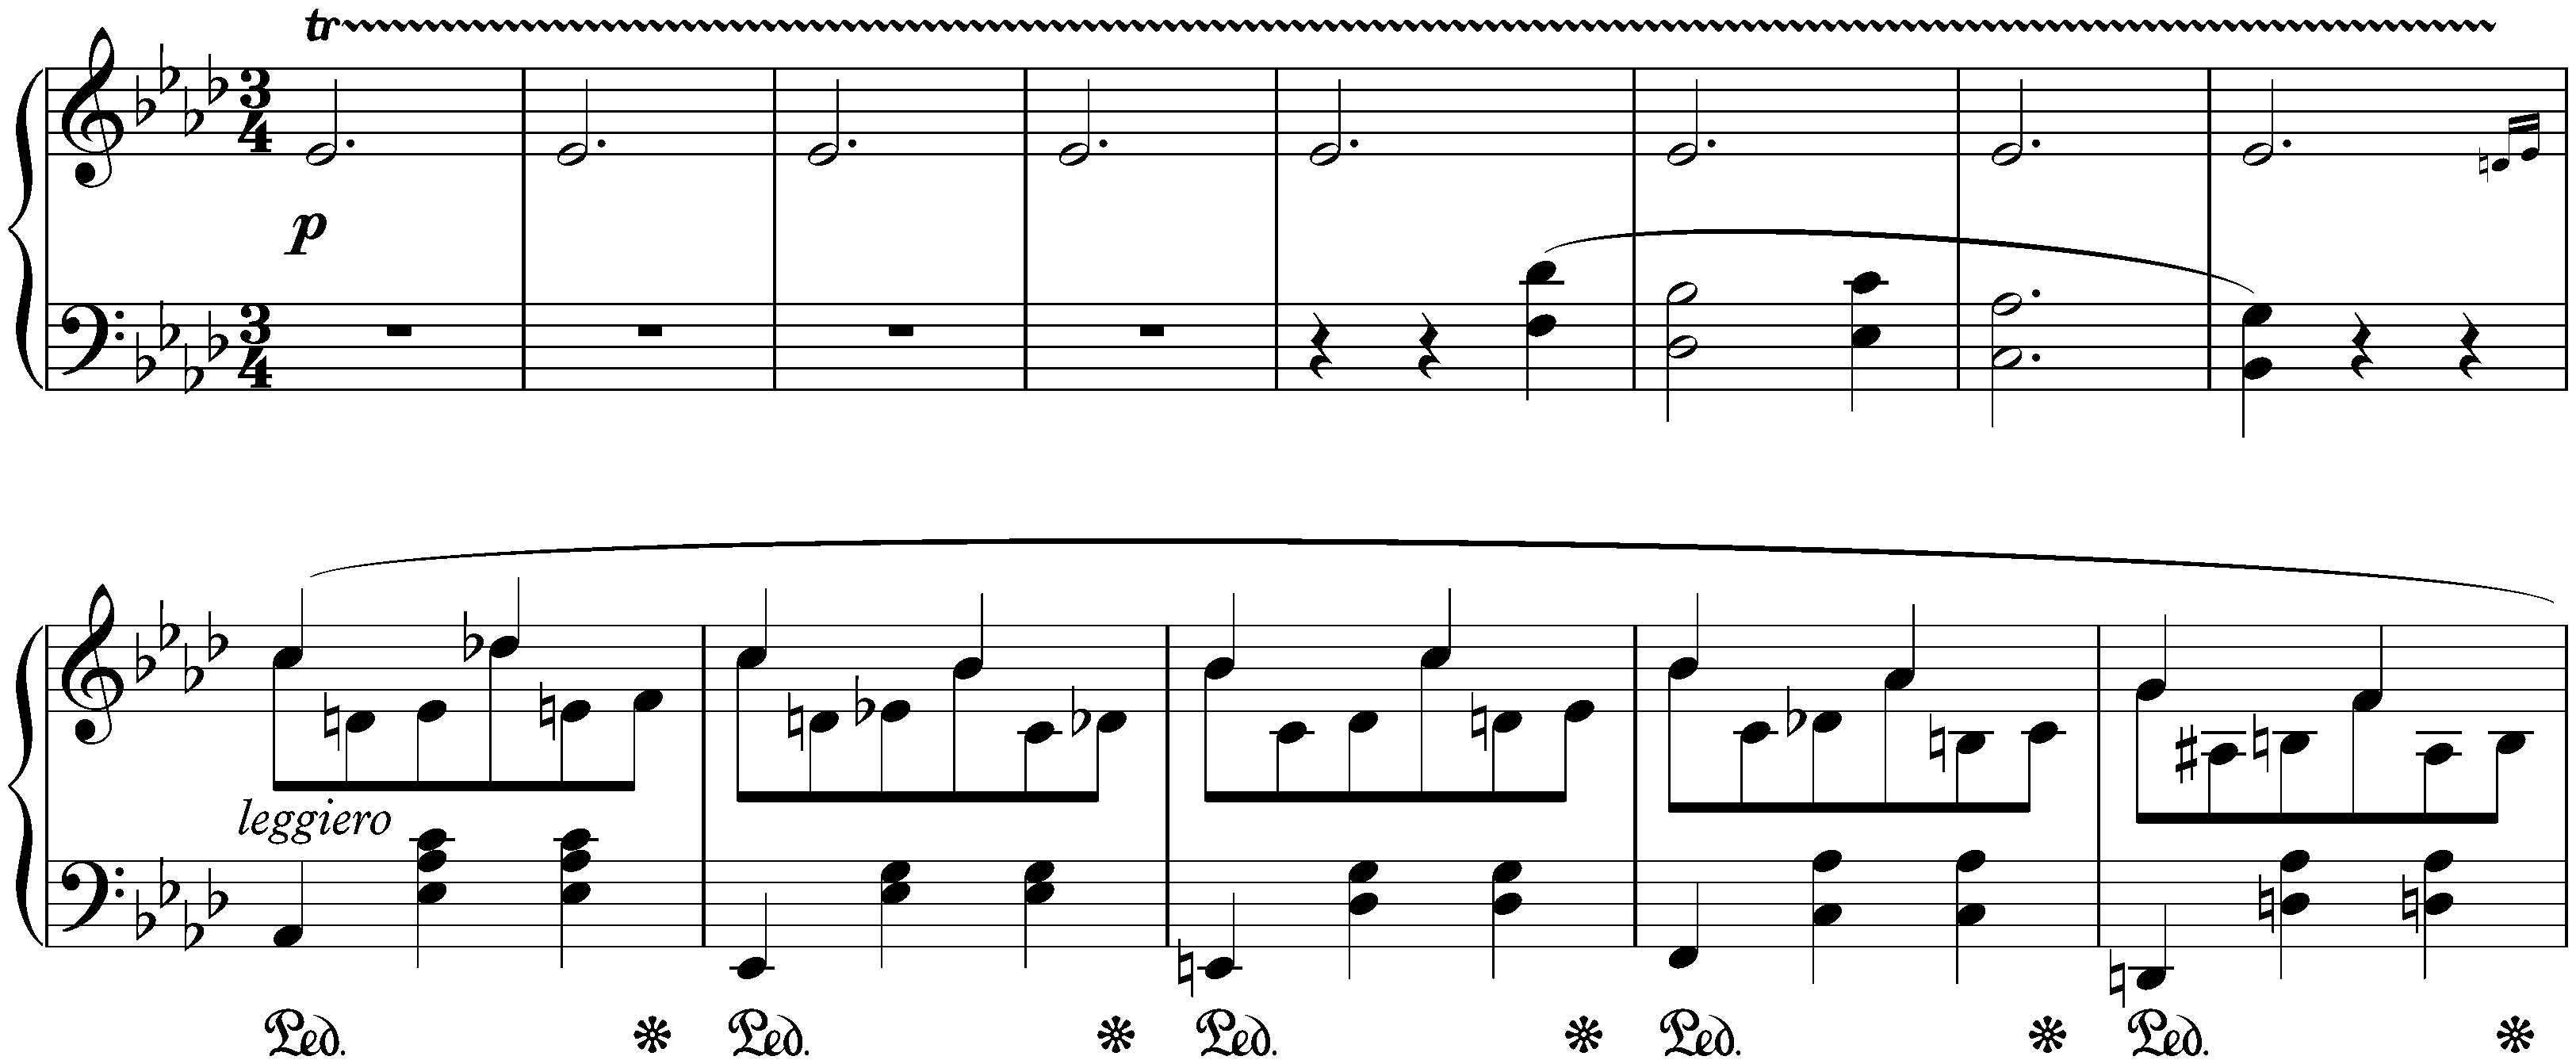 Valse in A-flat major, op. 42